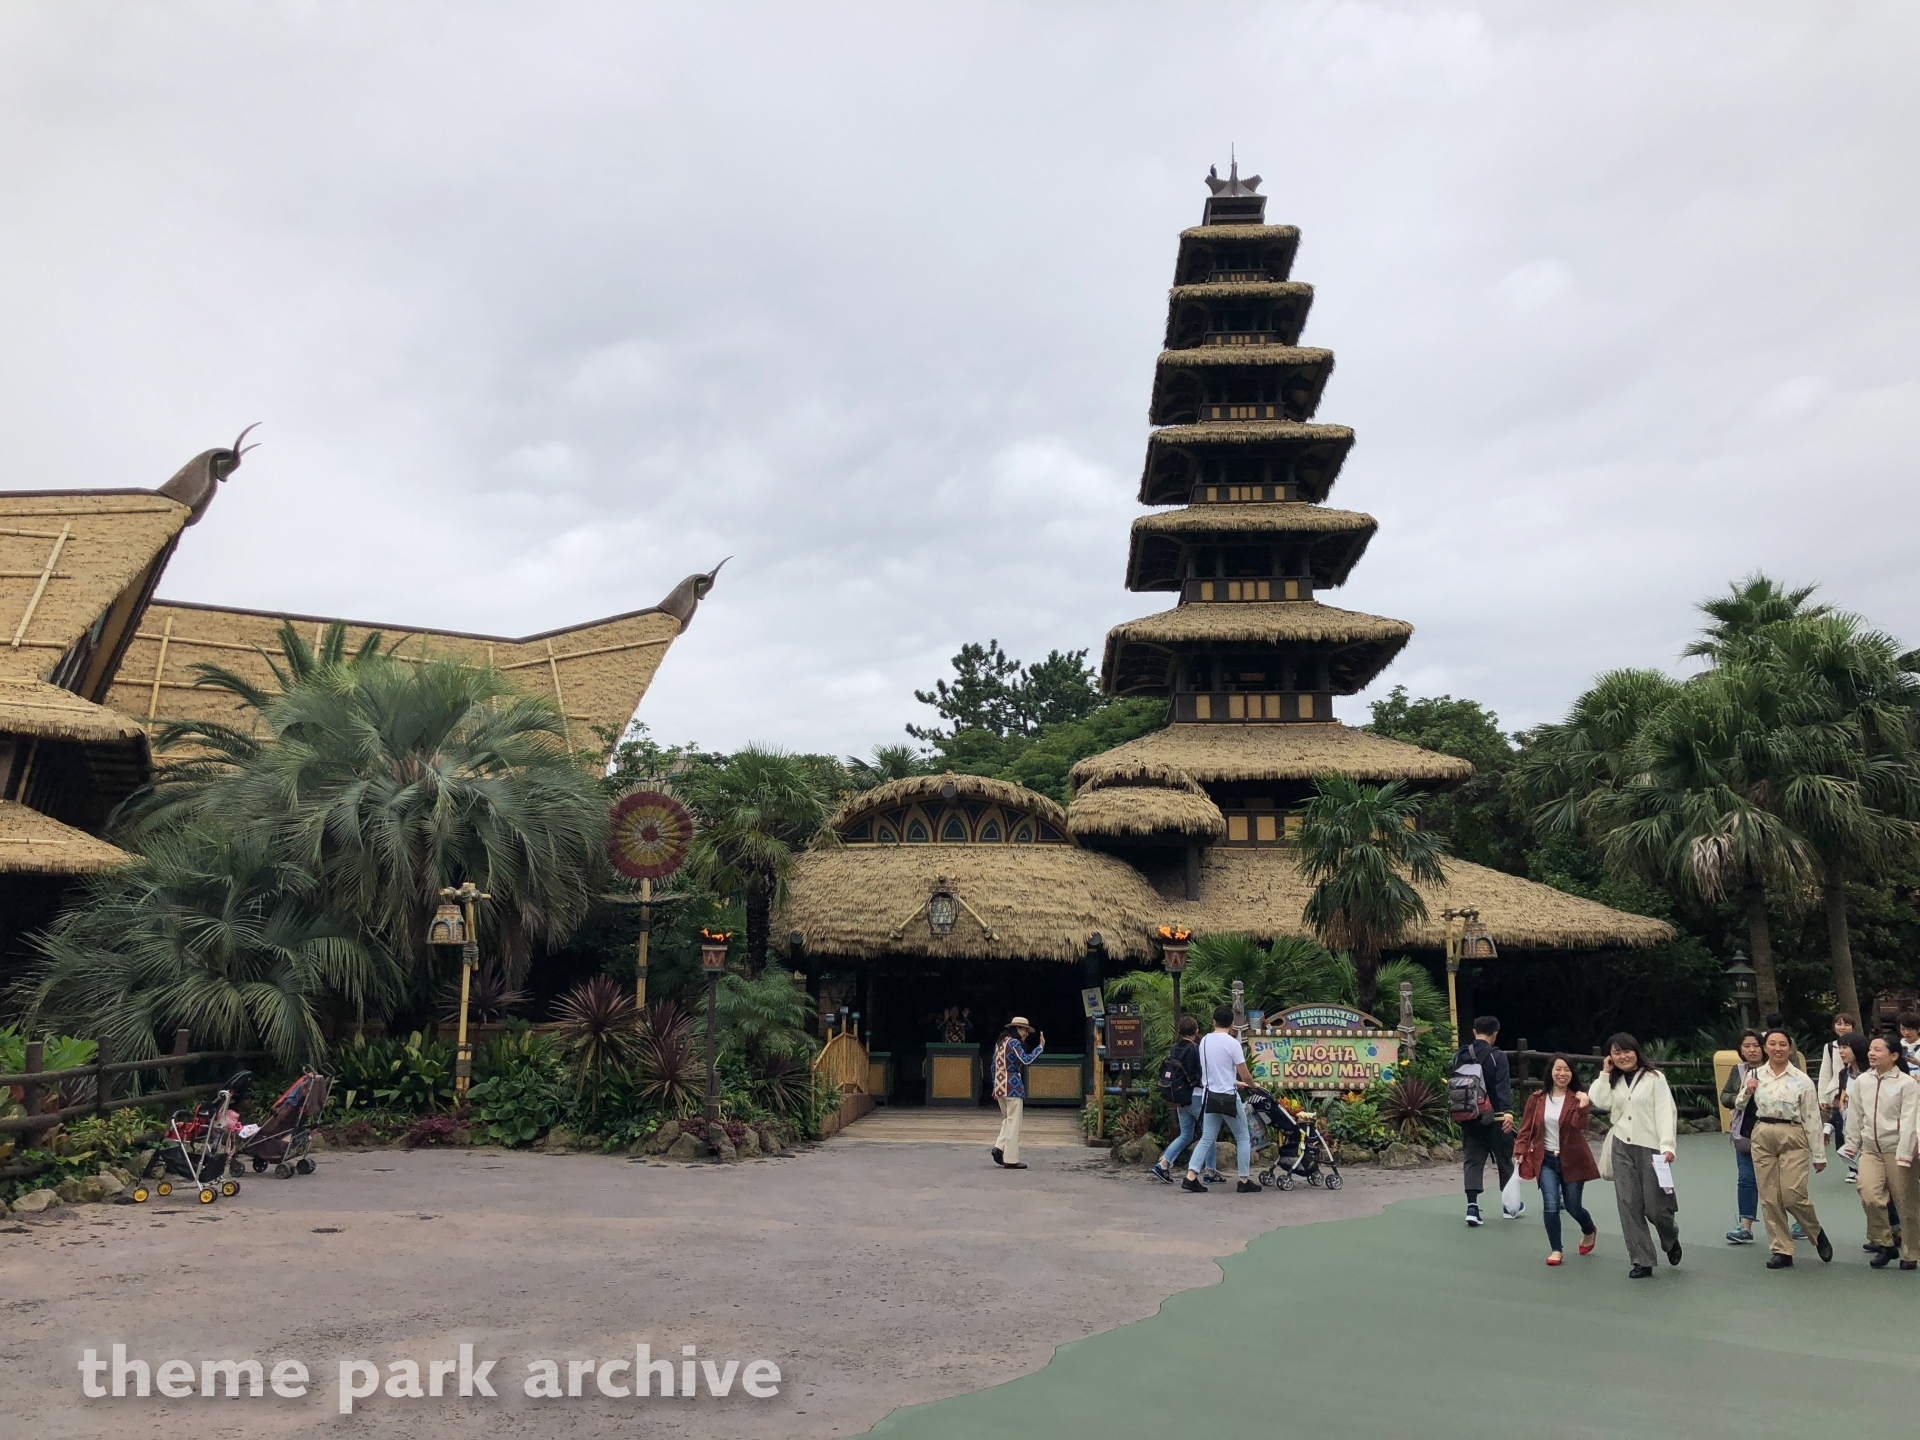 The Enchanted Tiki Room At Tokyo Disneyland Theme Park Archive